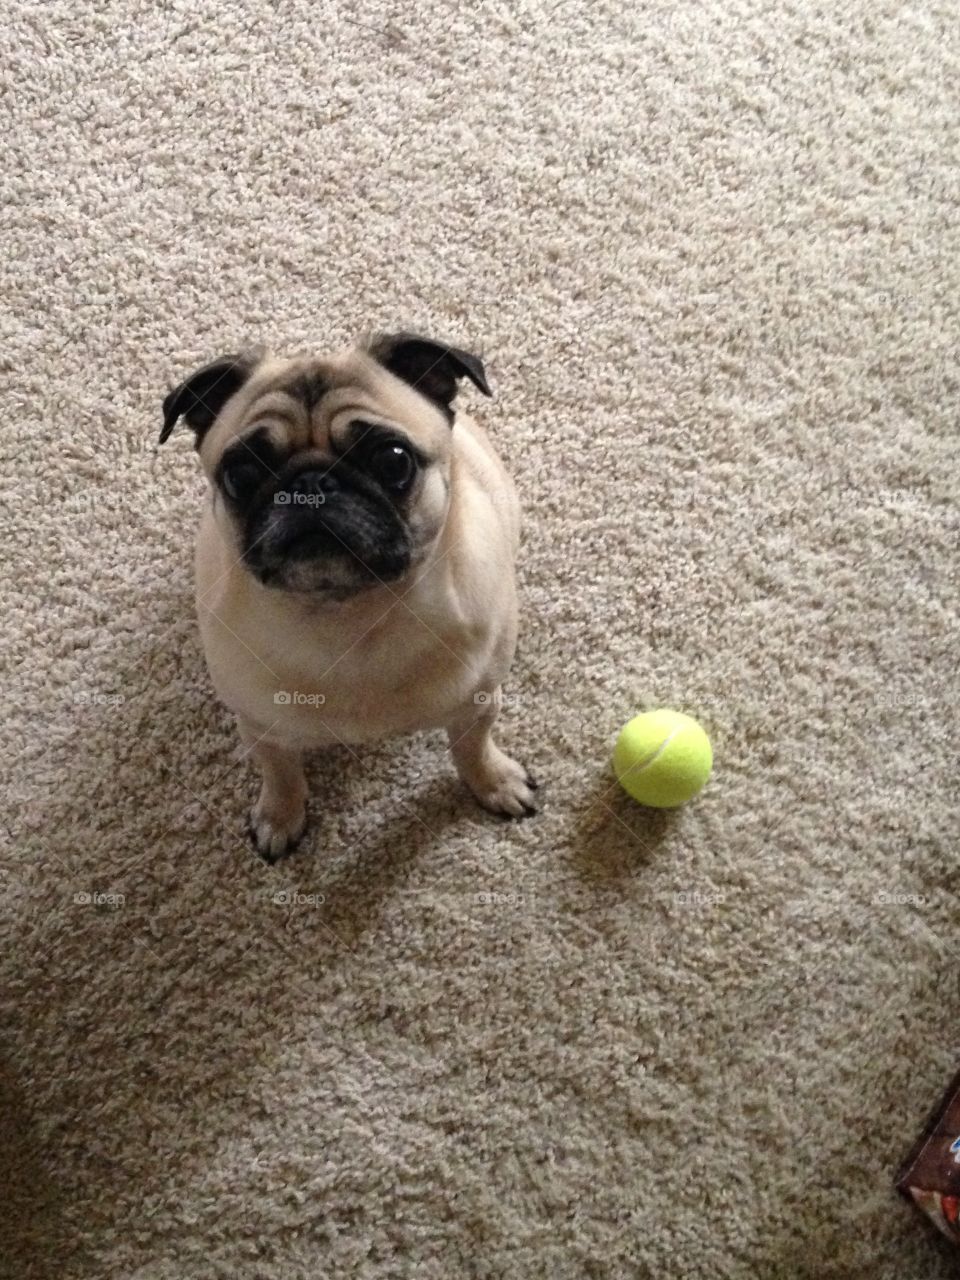 Wanna play. Pug wants to play ball